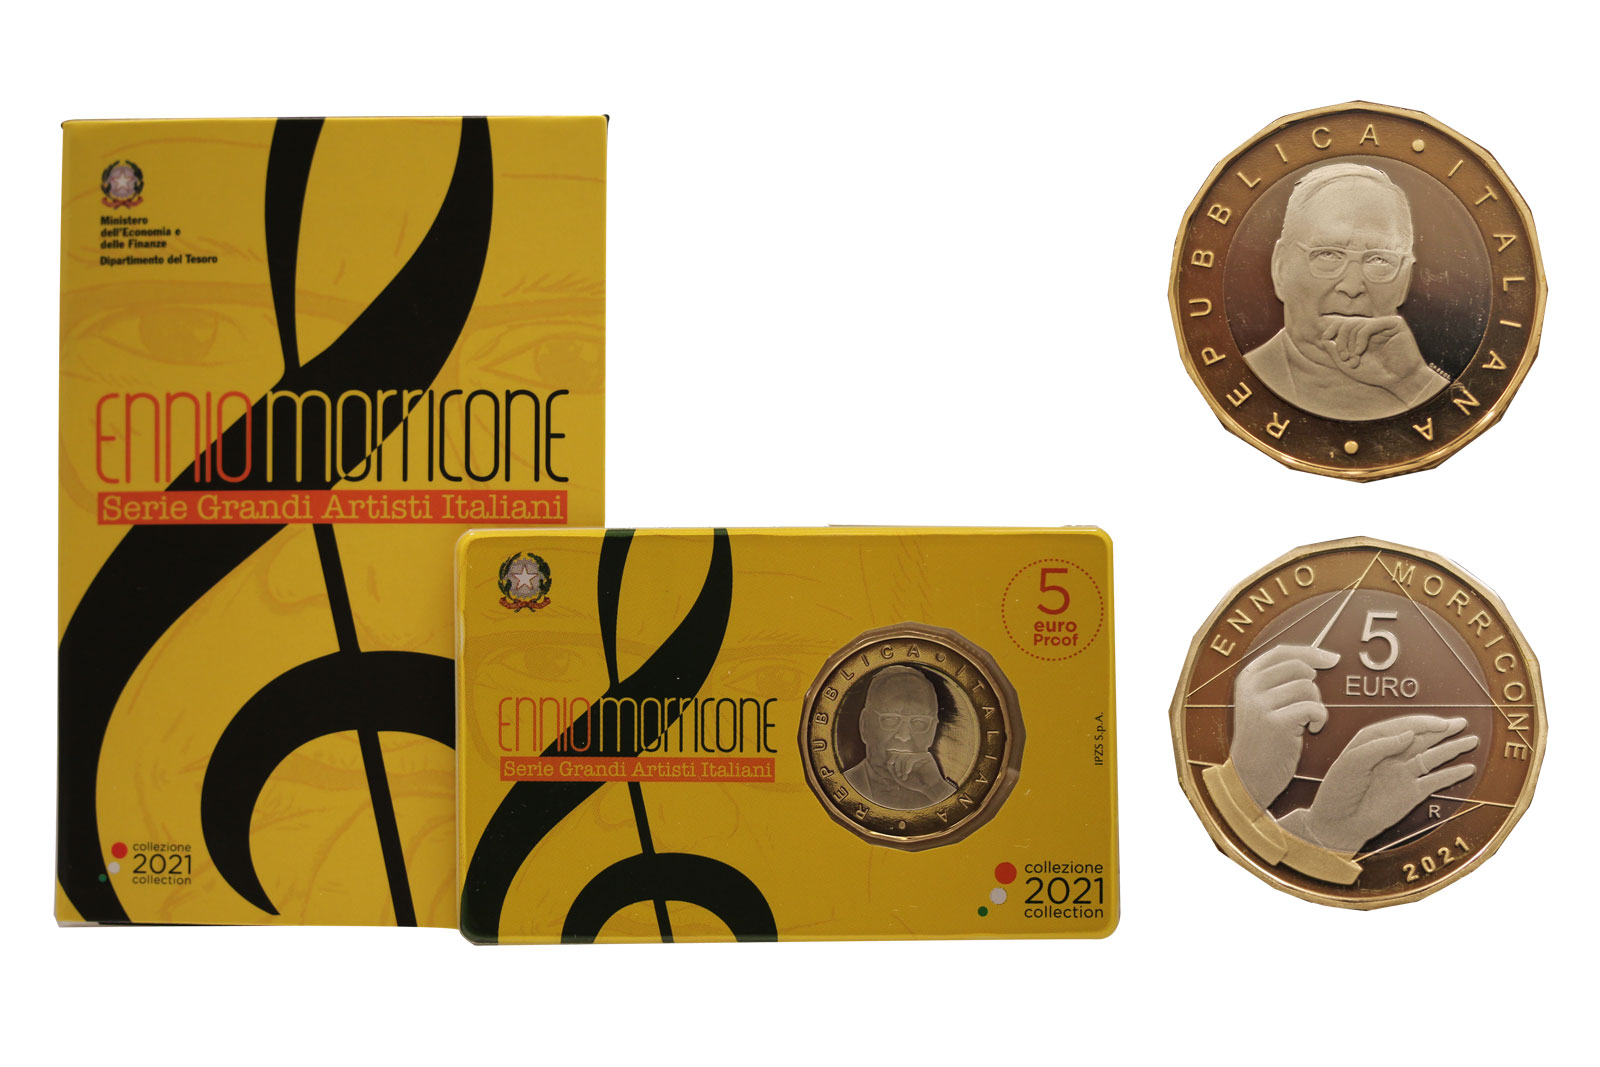 "Ennio Morricone" - Moneta da 5 euro in blister ufficiale